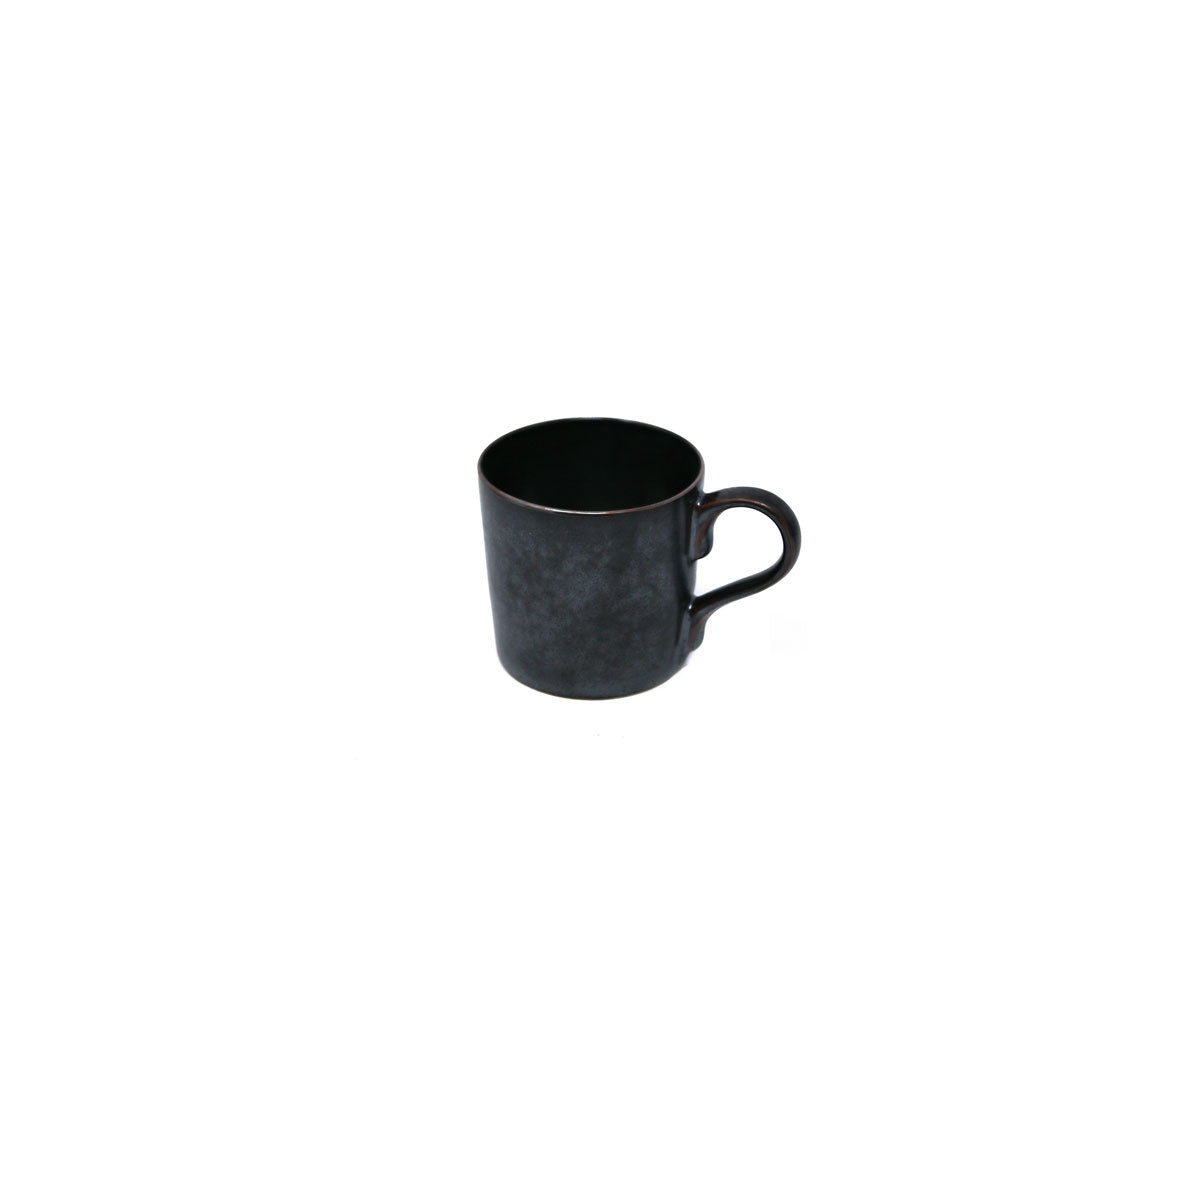 BORA BORA - Coffee set (cup & saucer)